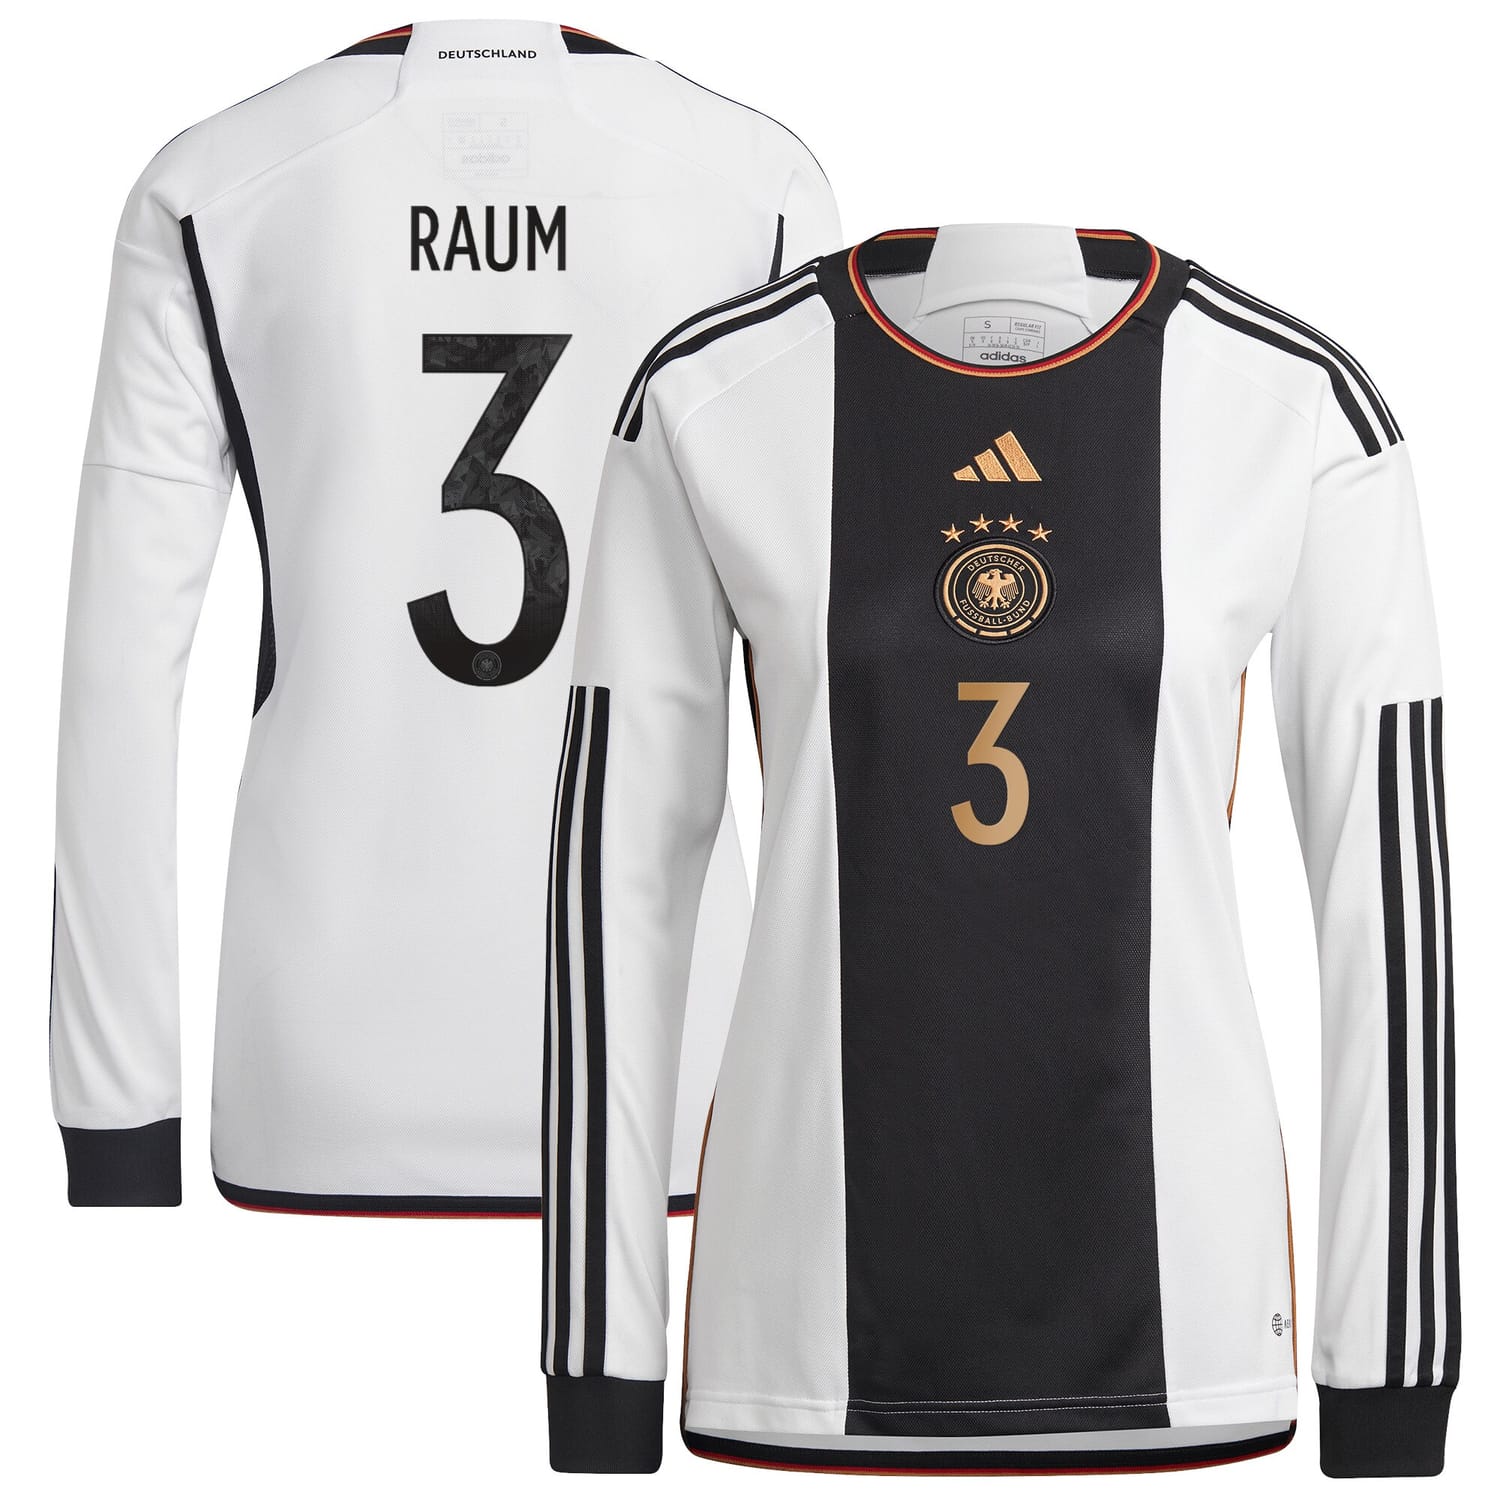 Germany National Team Home Jersey Shirt Long Sleeve player David Raum 3 printing for Women